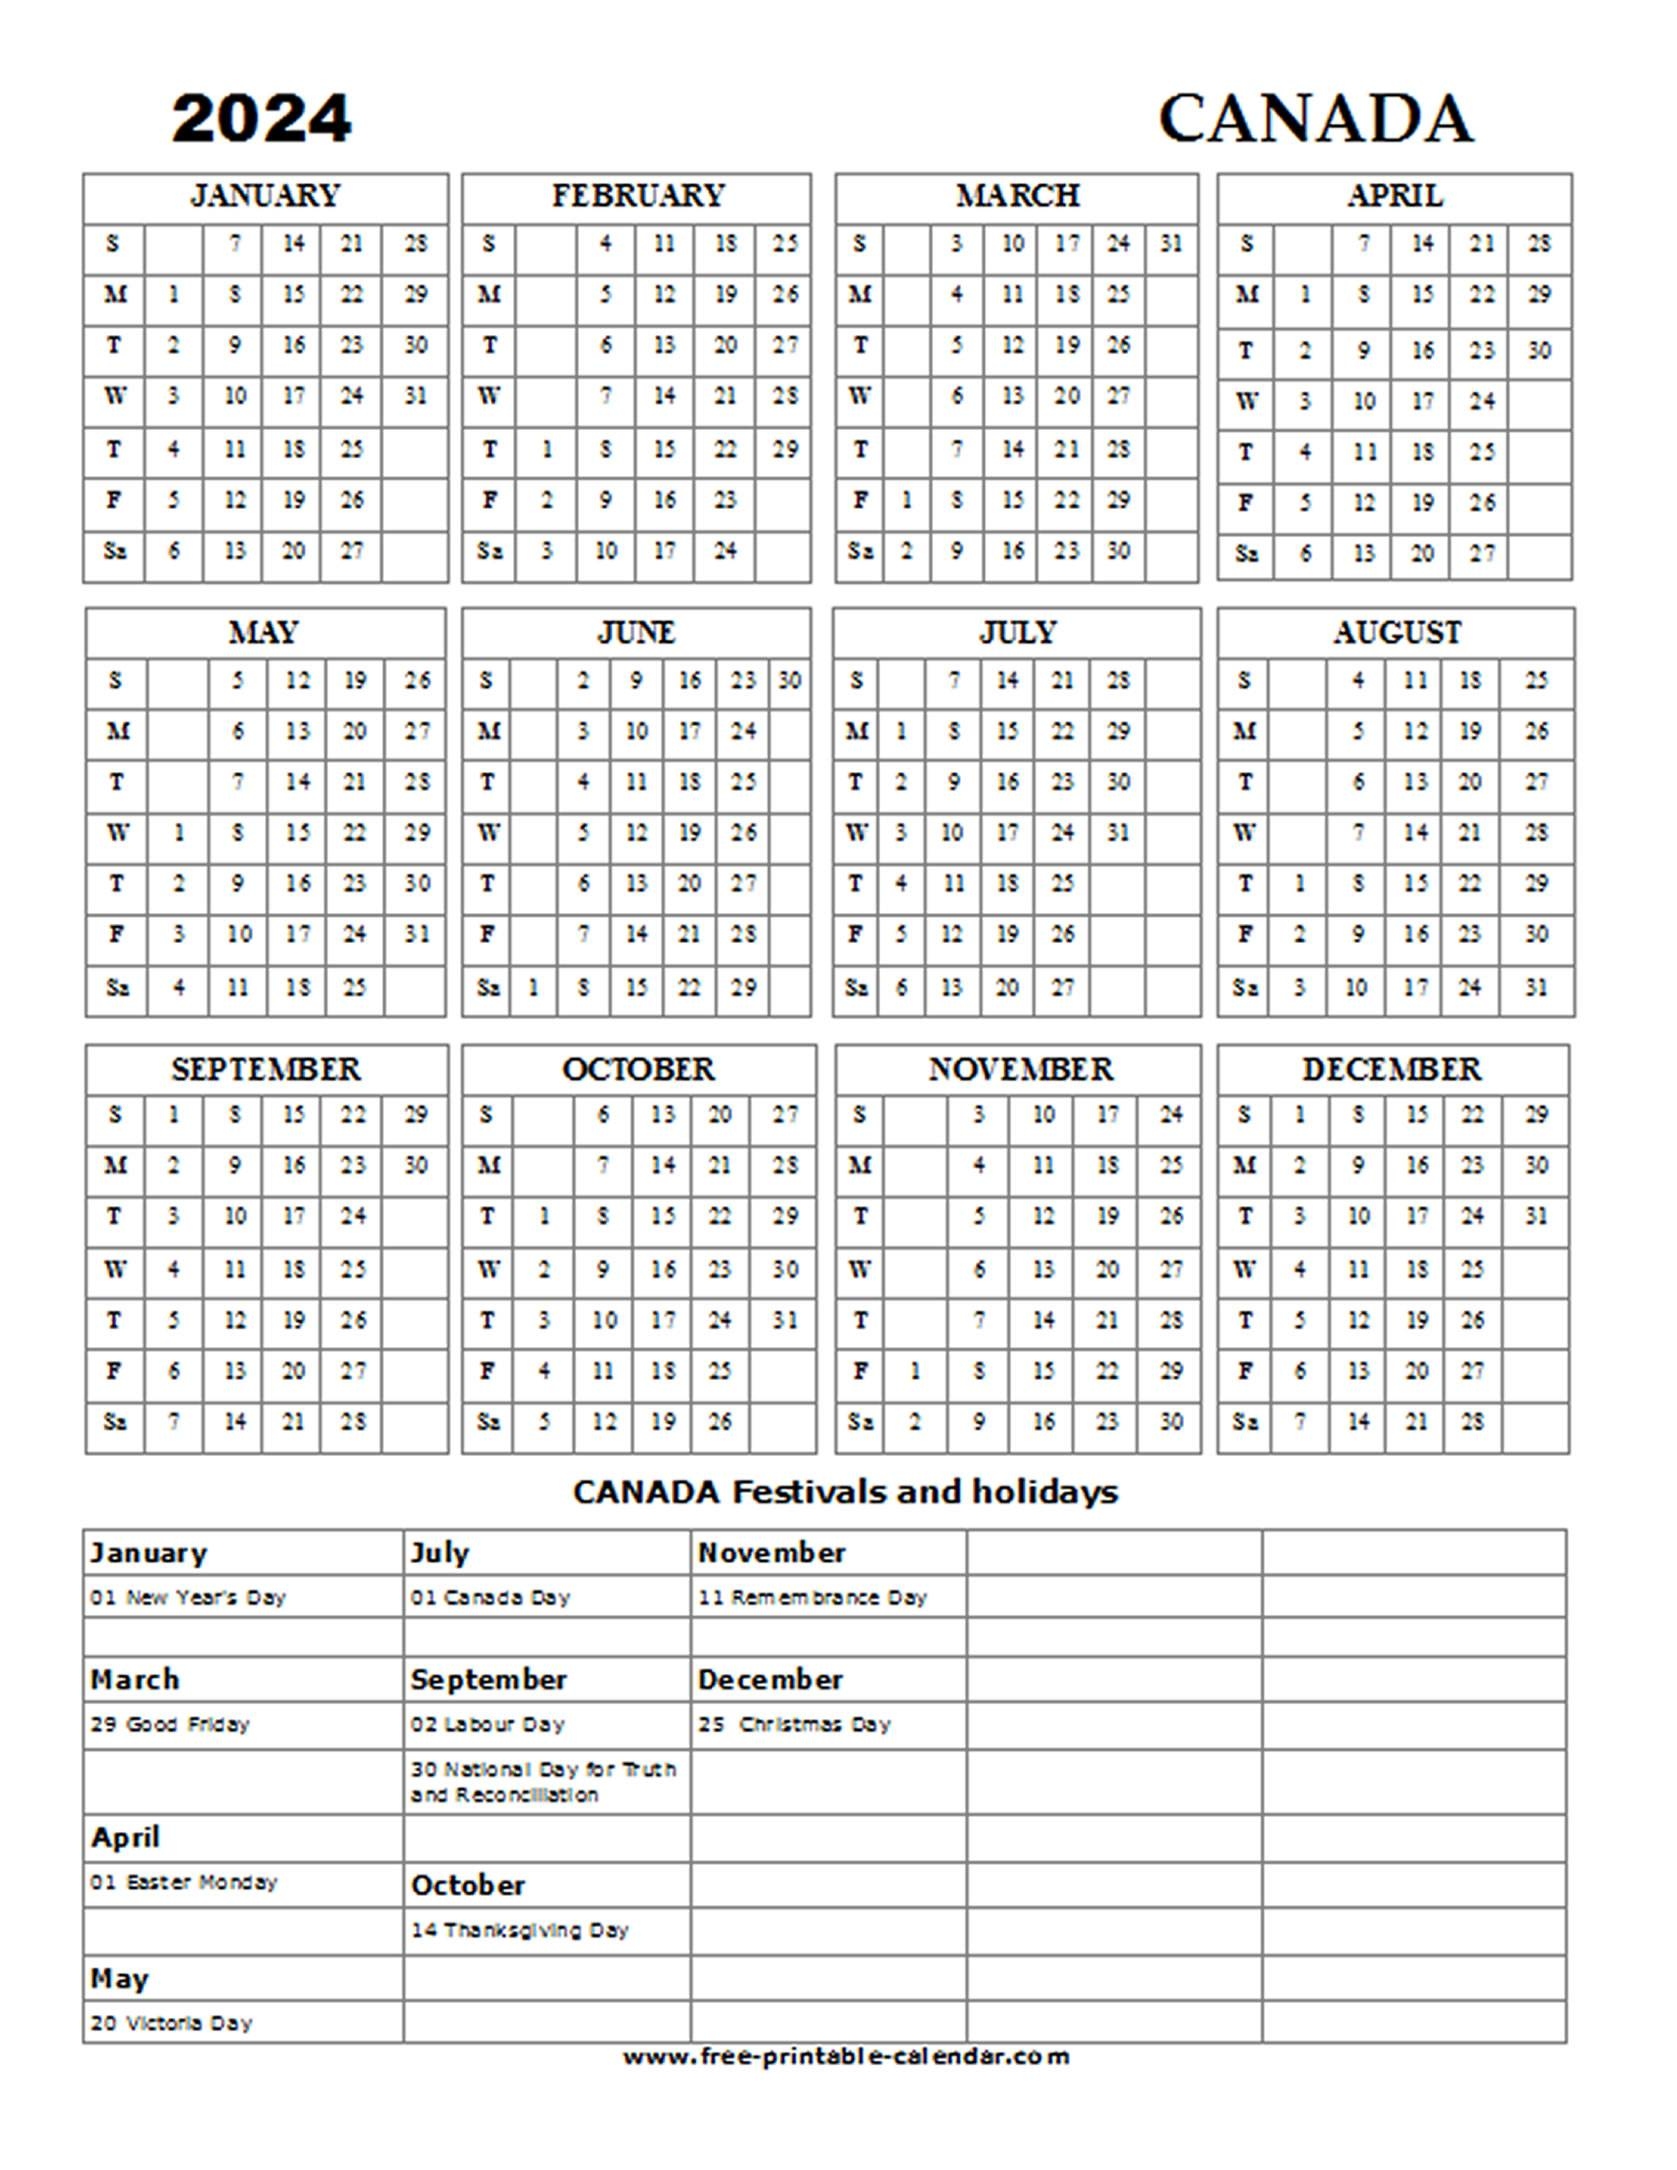 2024 Canada Holiday Calendar - Free-Printable-Calendar within Free Printable Calendar 2024 With Canadian Holidays